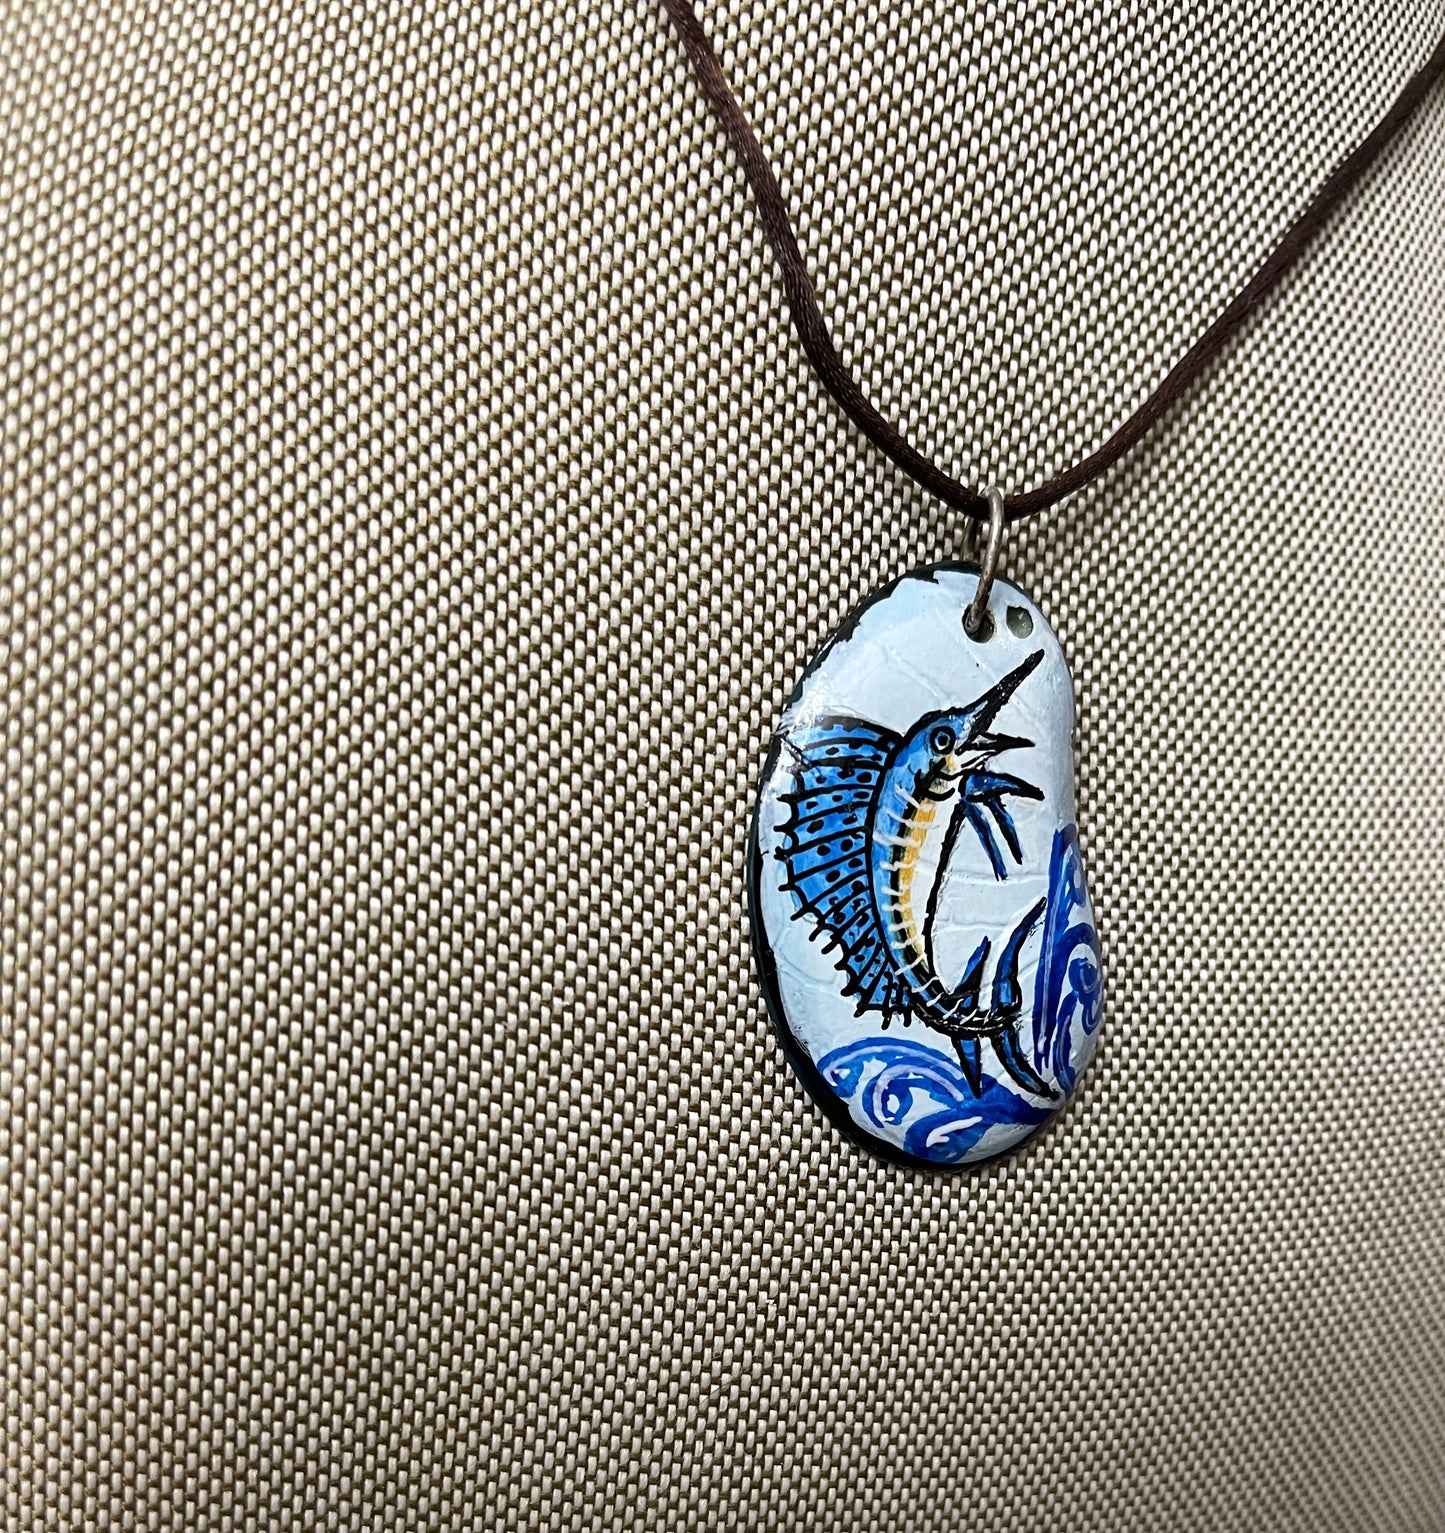 Etched Tagua Slice Blue Sailfish Carved Necklace Pendant Panama